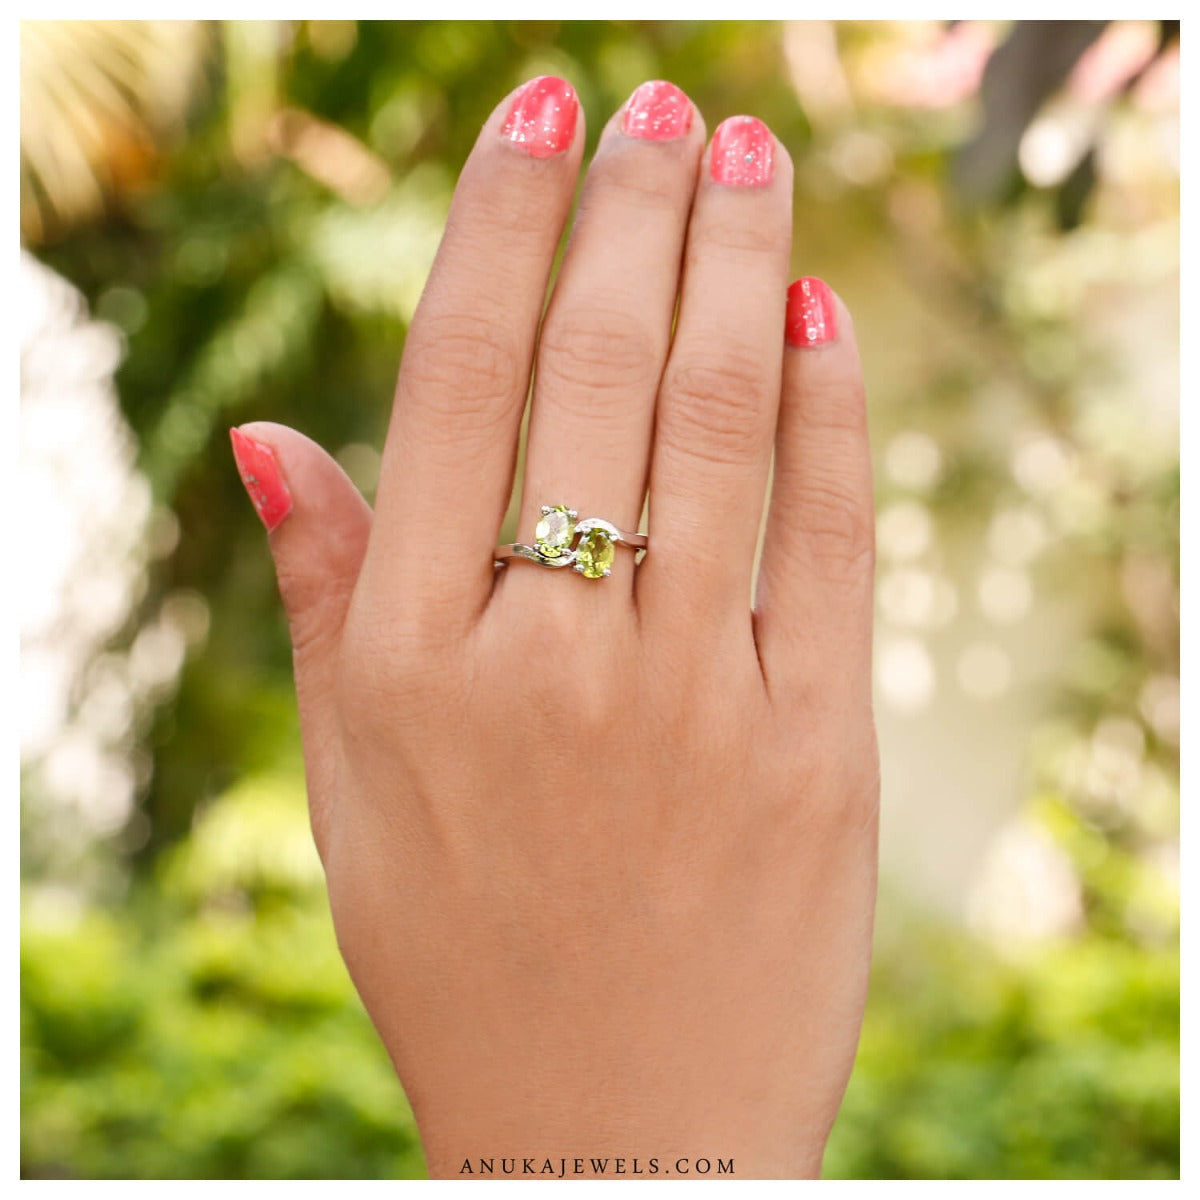 buy silver ring, sterling silver ring, buy peridot ring, peridot jewelry, green ring